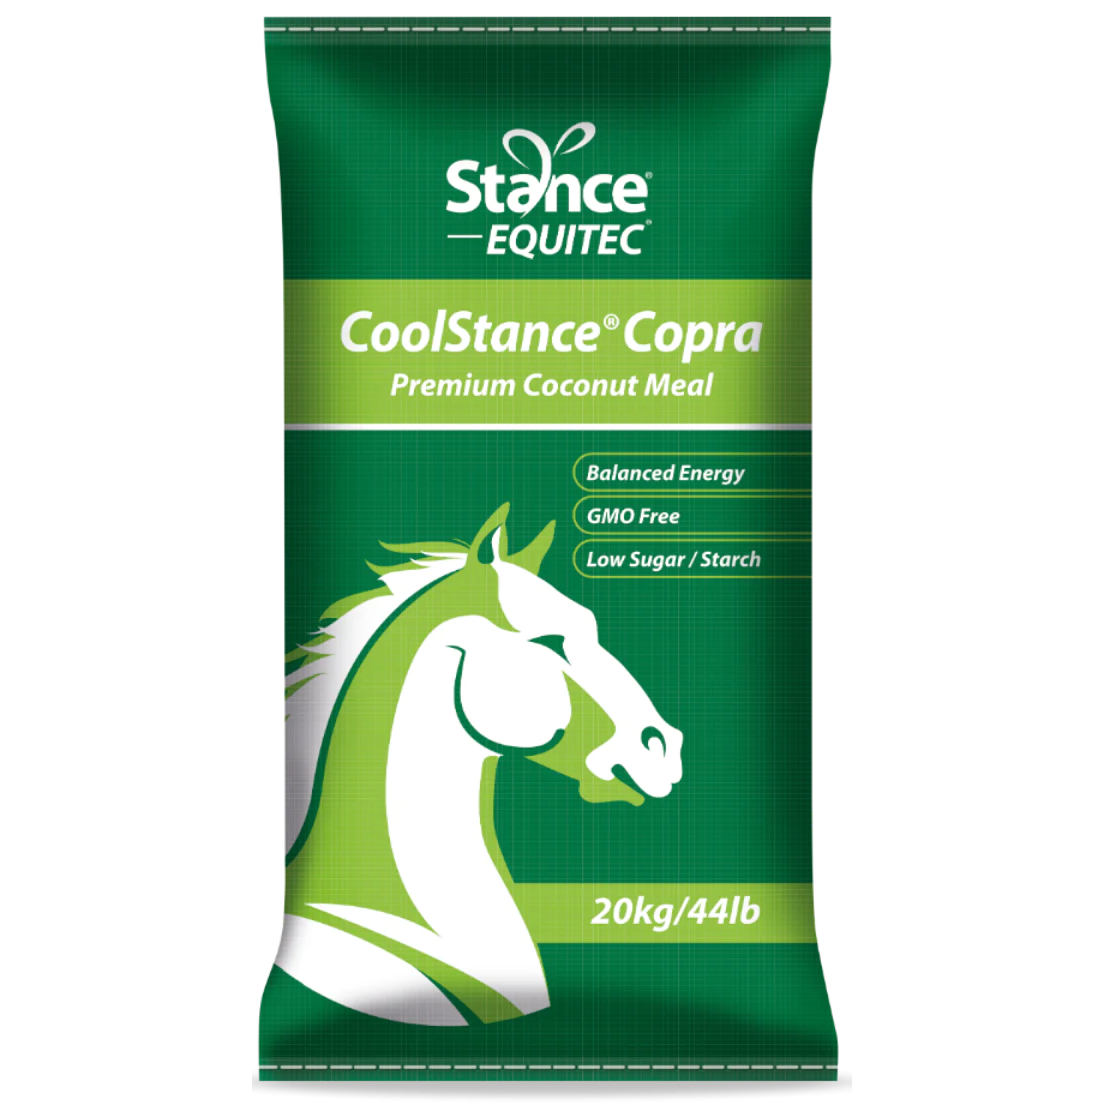 CoolStance Copra Premium Coconut Meal - 20KG